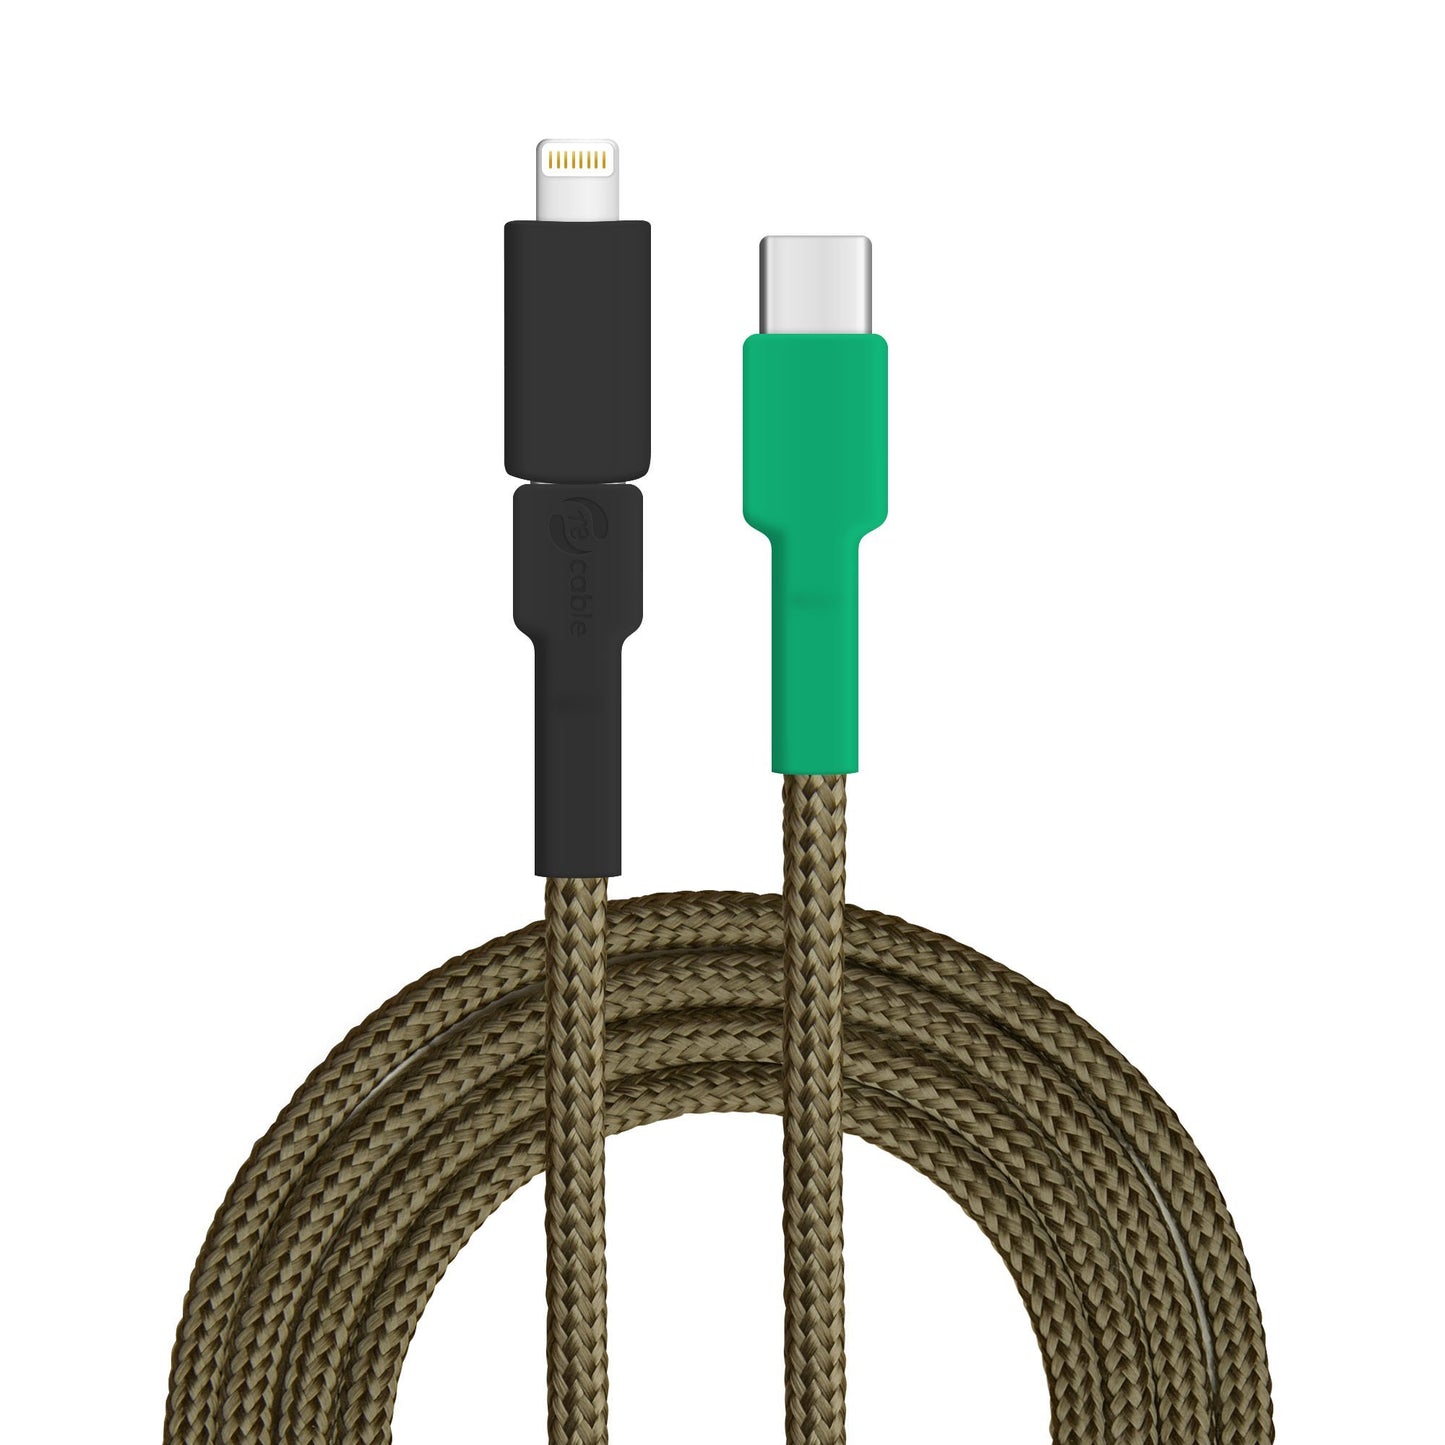 USB-Kabel, Design: Kakapo, Anschlüsse: USB C auf Micro-USB mit Lightning Adapter (verbunden)